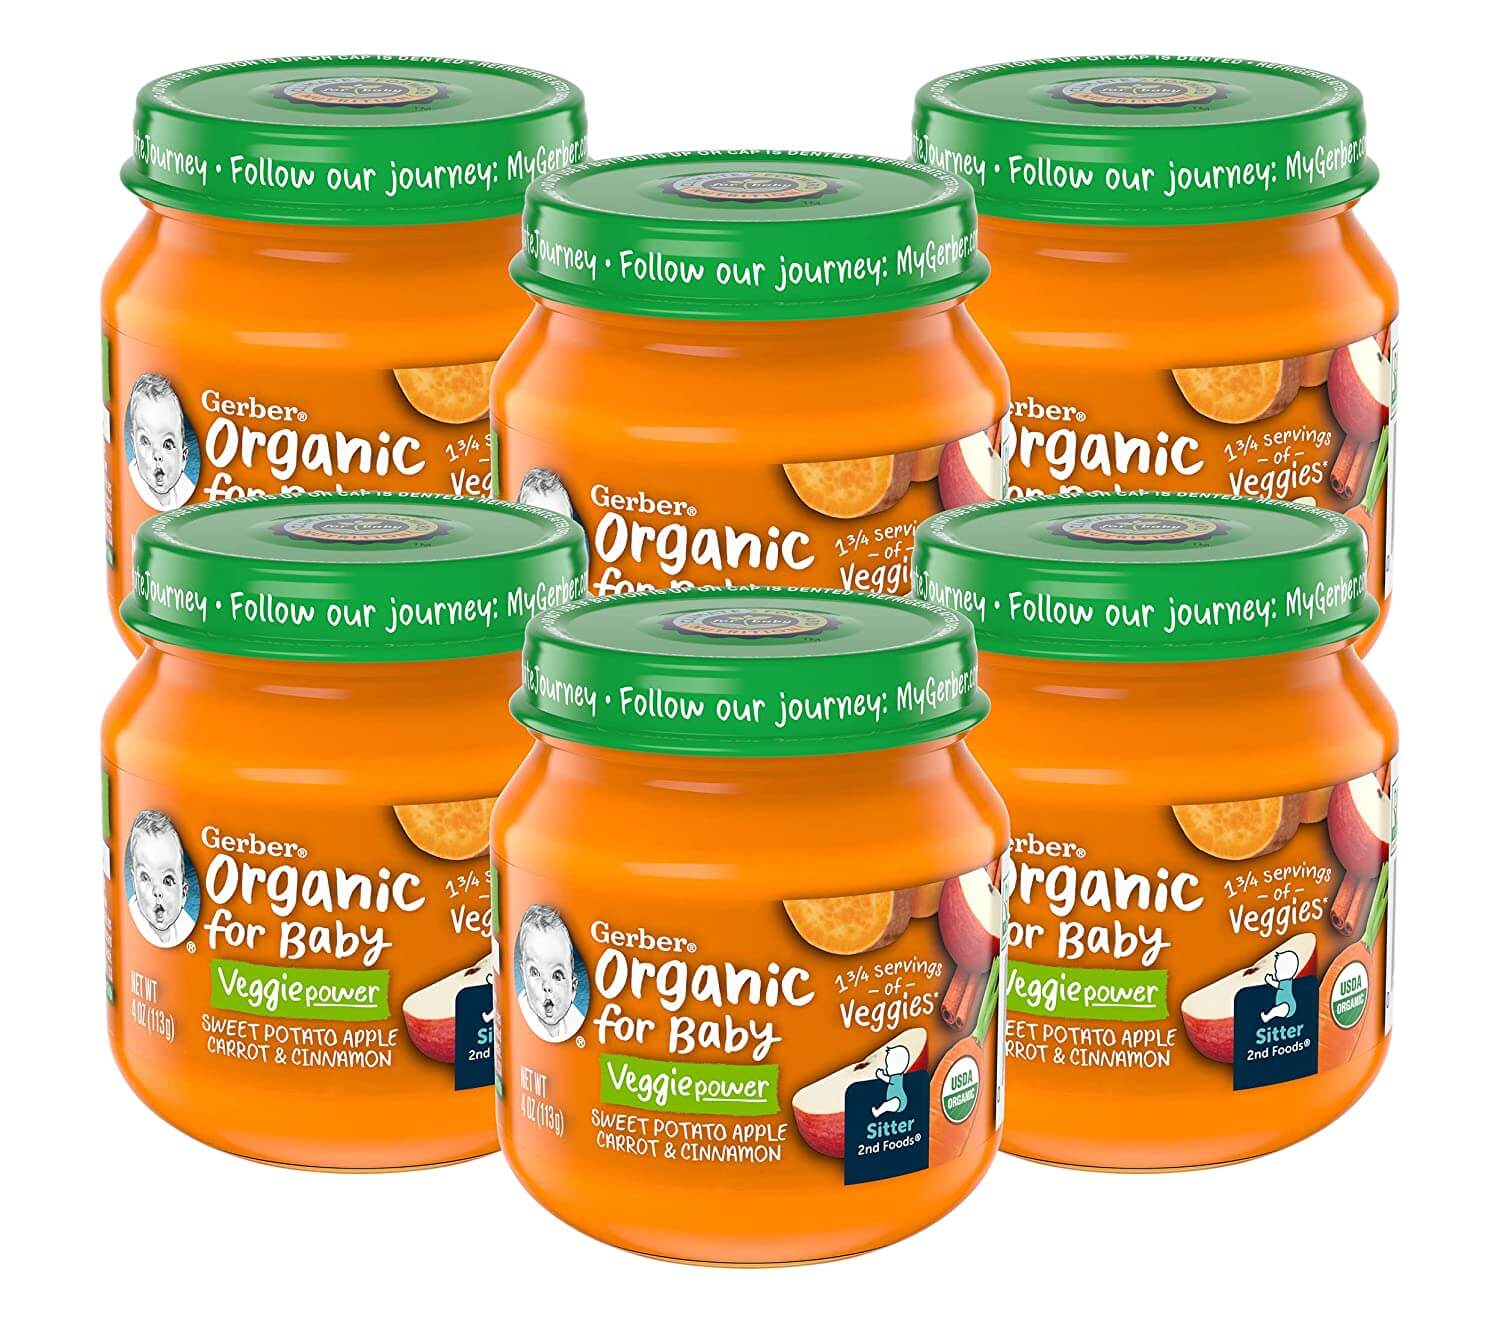 Gerber Organic for Baby 2nd Foods Veggie Power Baby Food Jar, Sweet Potato Apple Carrot & Cinnamon, Non-GMO & USDA Organic Pureed Baby Food, 4 OZ Glass Jar (Pack of 6)